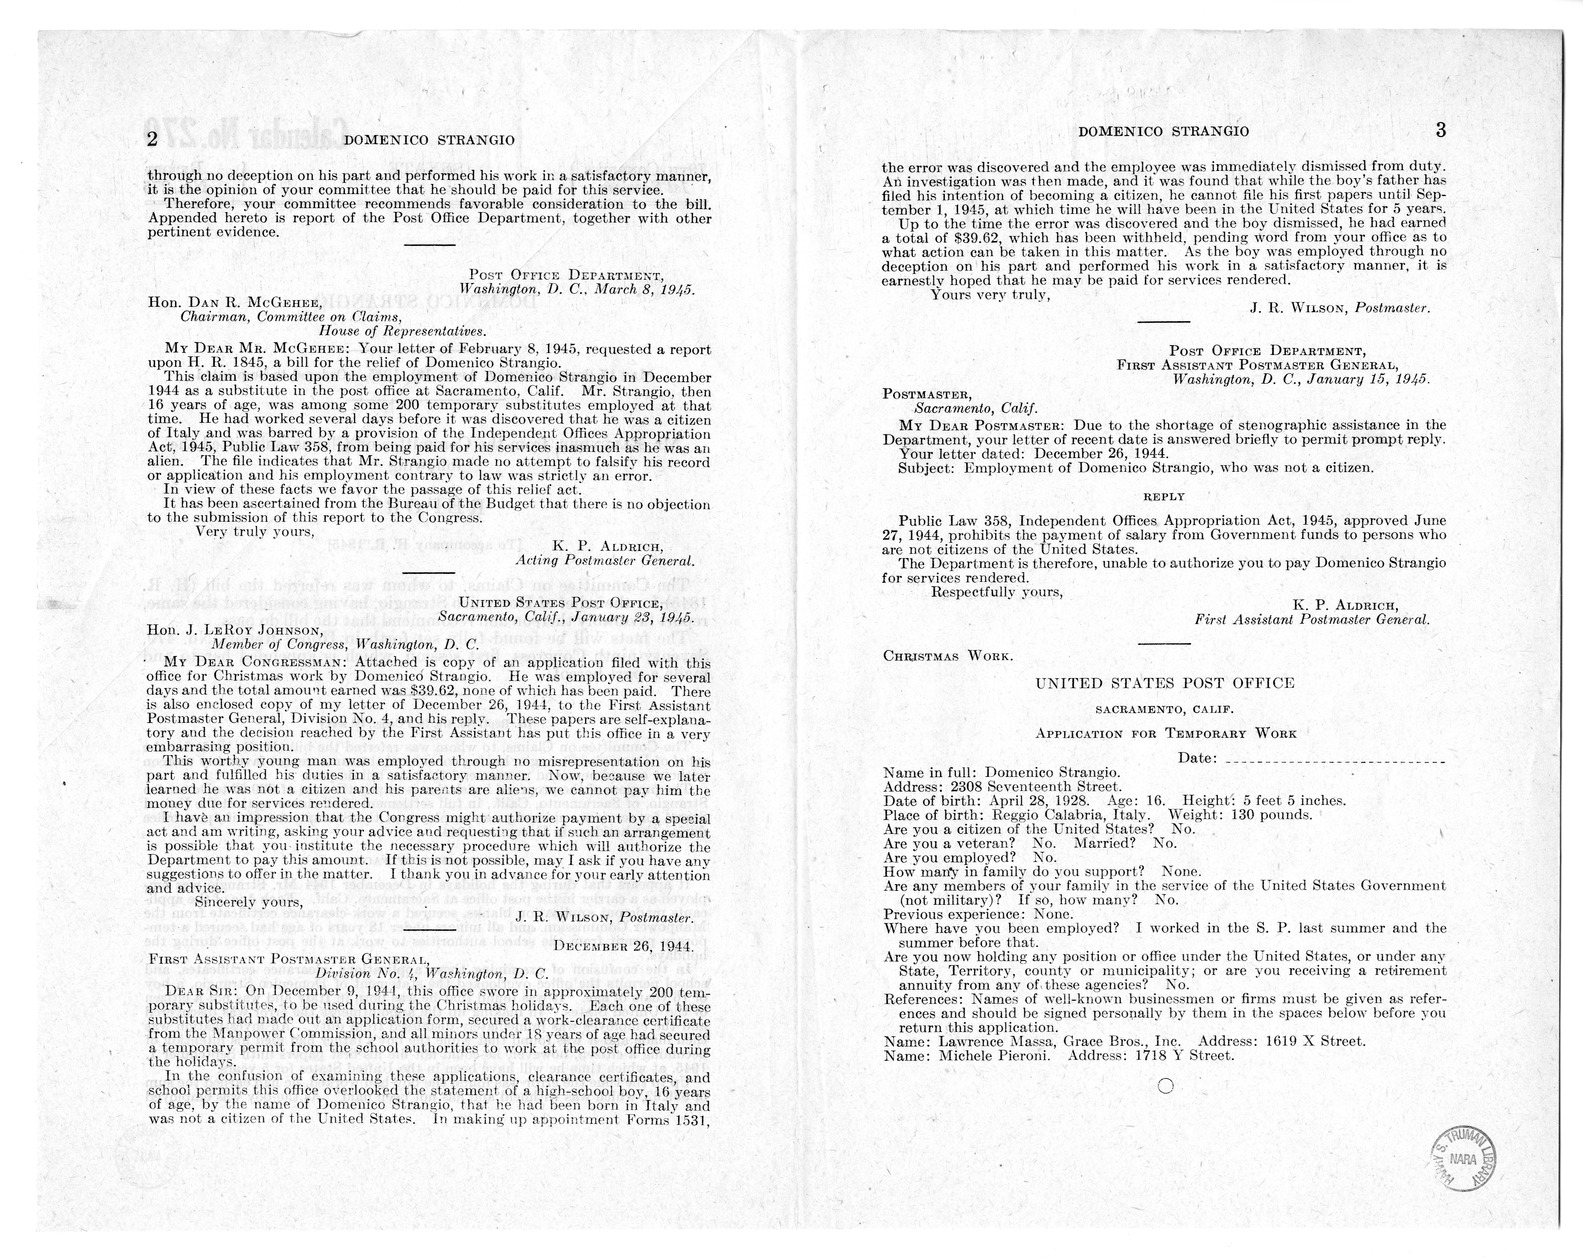 Memorandum from Frederick J. Bailey to M. C. Latta, H. R. 1845, for the Relief of Domenico Strangio, with Attachments